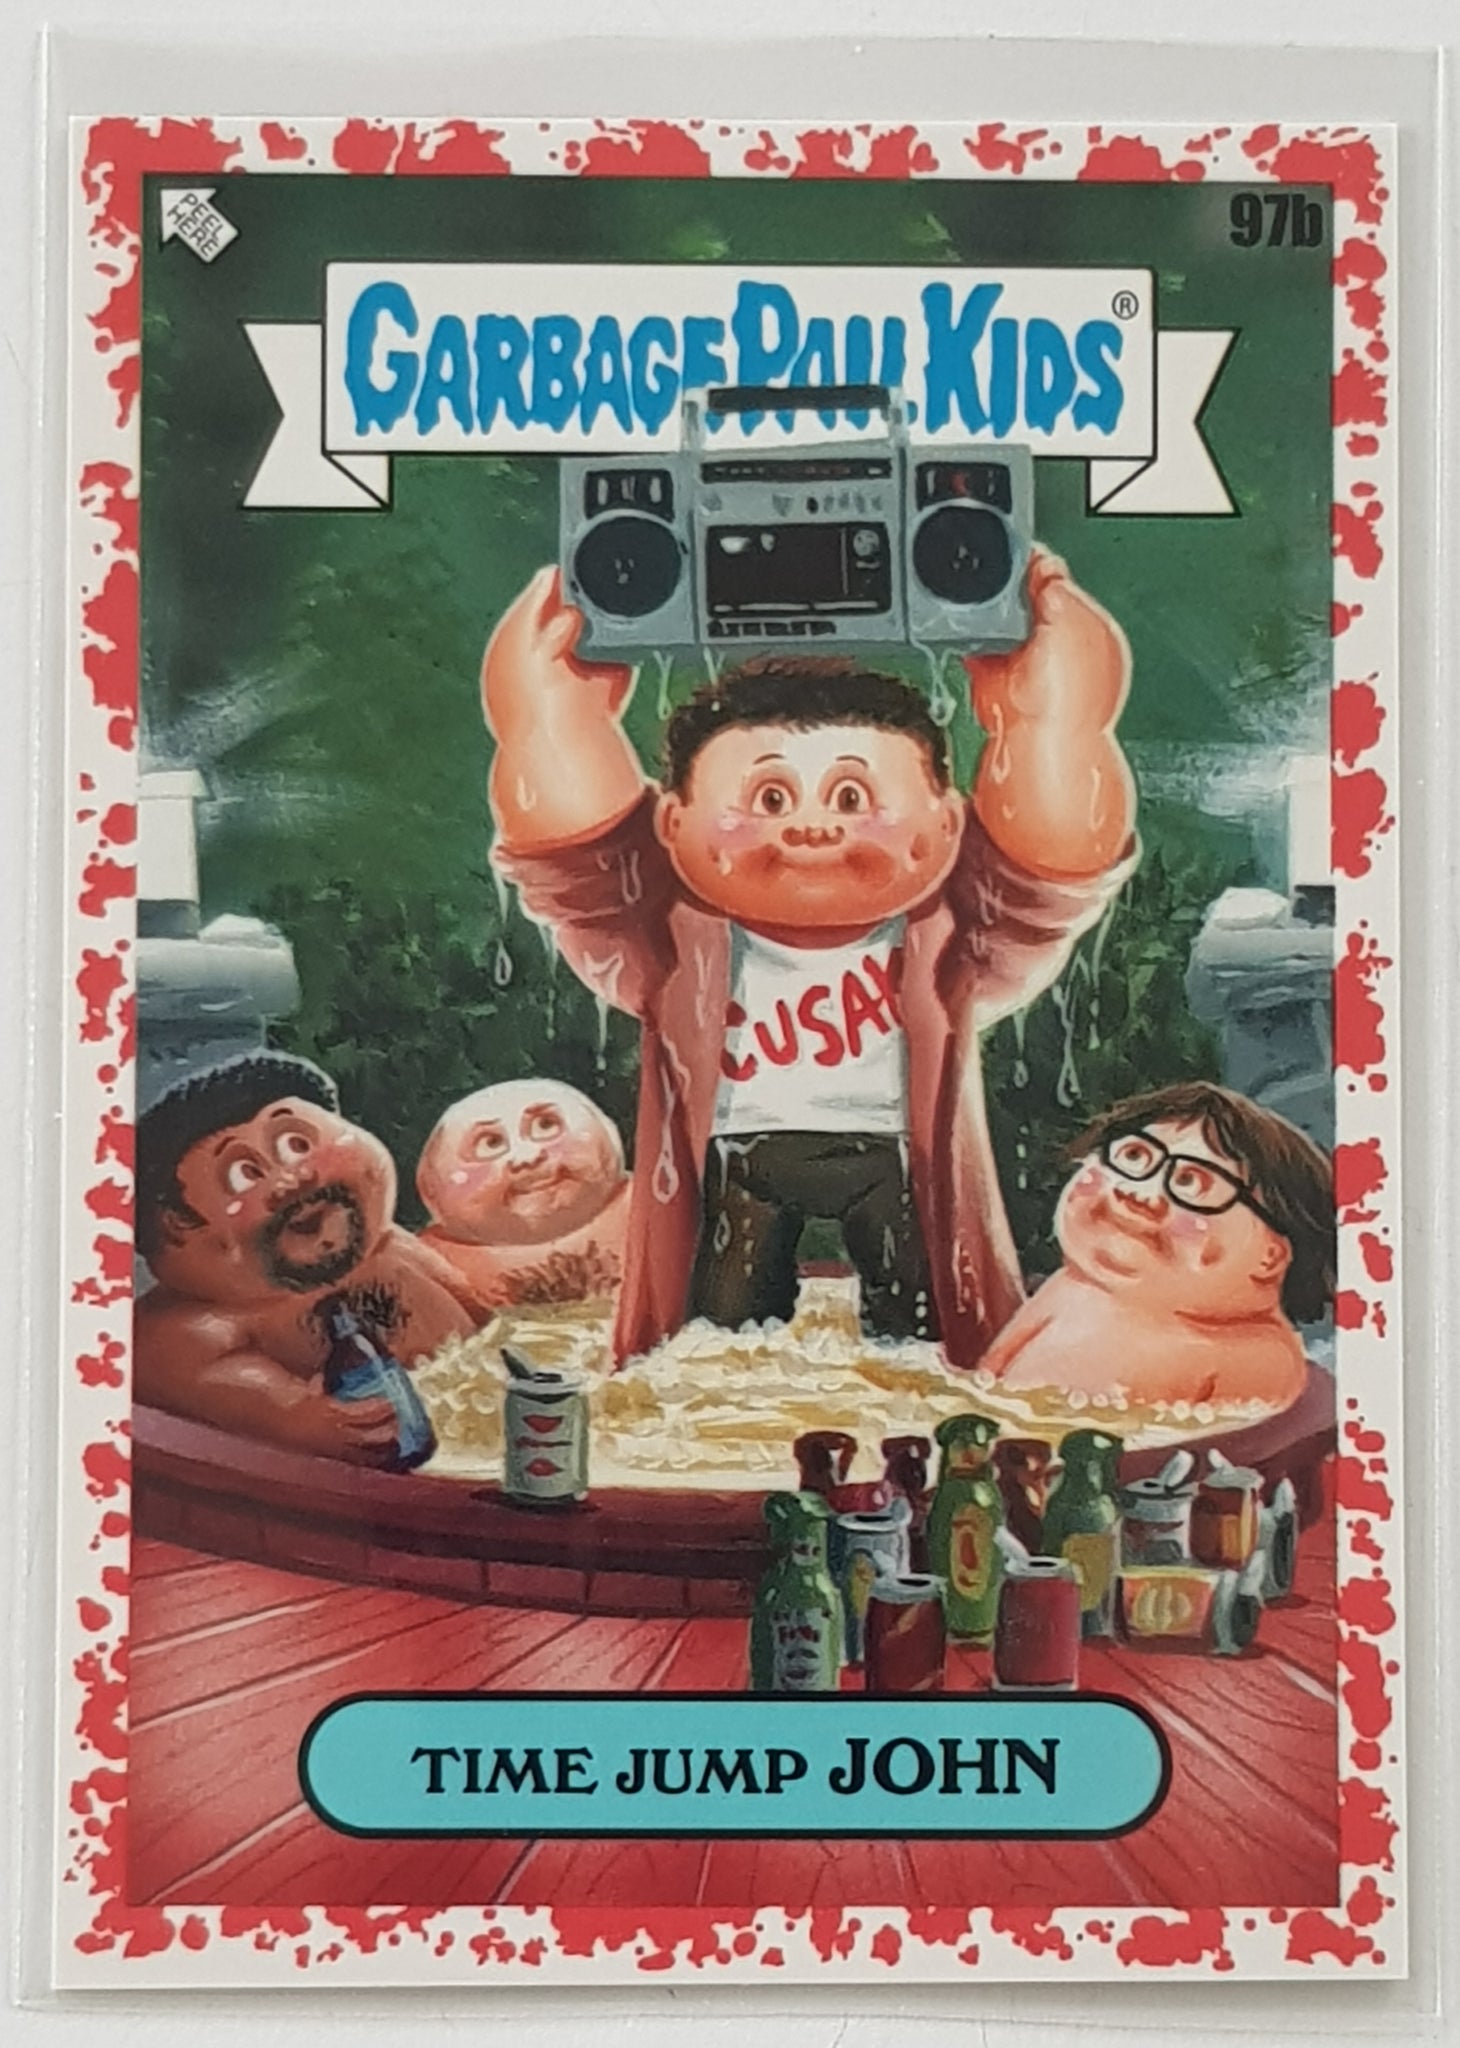 Garbage Pail Kids Intergoolactic Mayhem Time Jump John #97b Super Nova Red Parallel /75 Trading Card